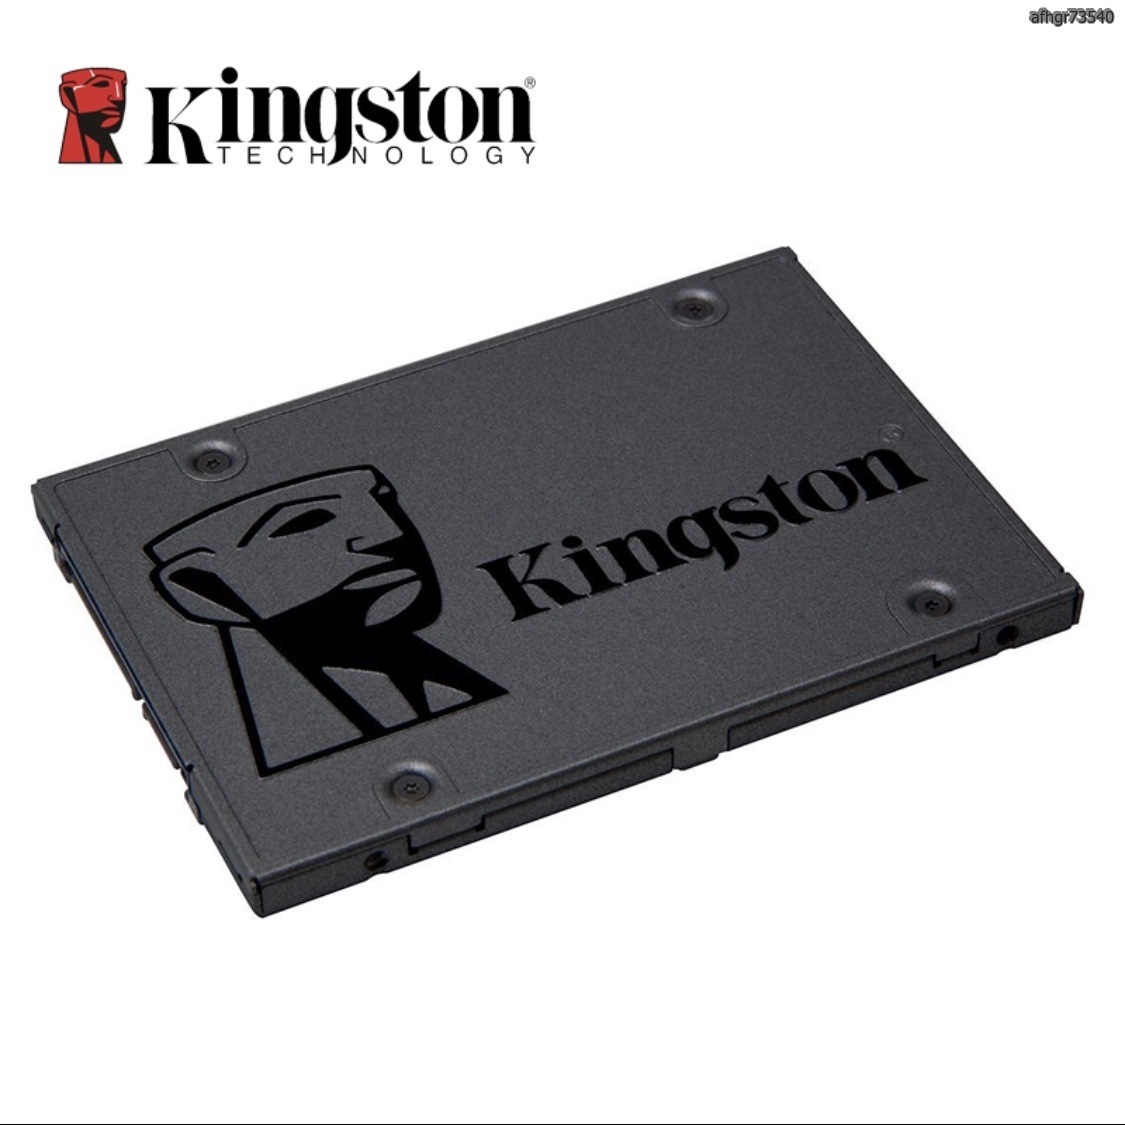 【送料無料】SSD Kingston A400 240GB SATA3 / 6.0Gbps 新品 高速 3D NAND TLC 内蔵 2.5インチ PC_画像1